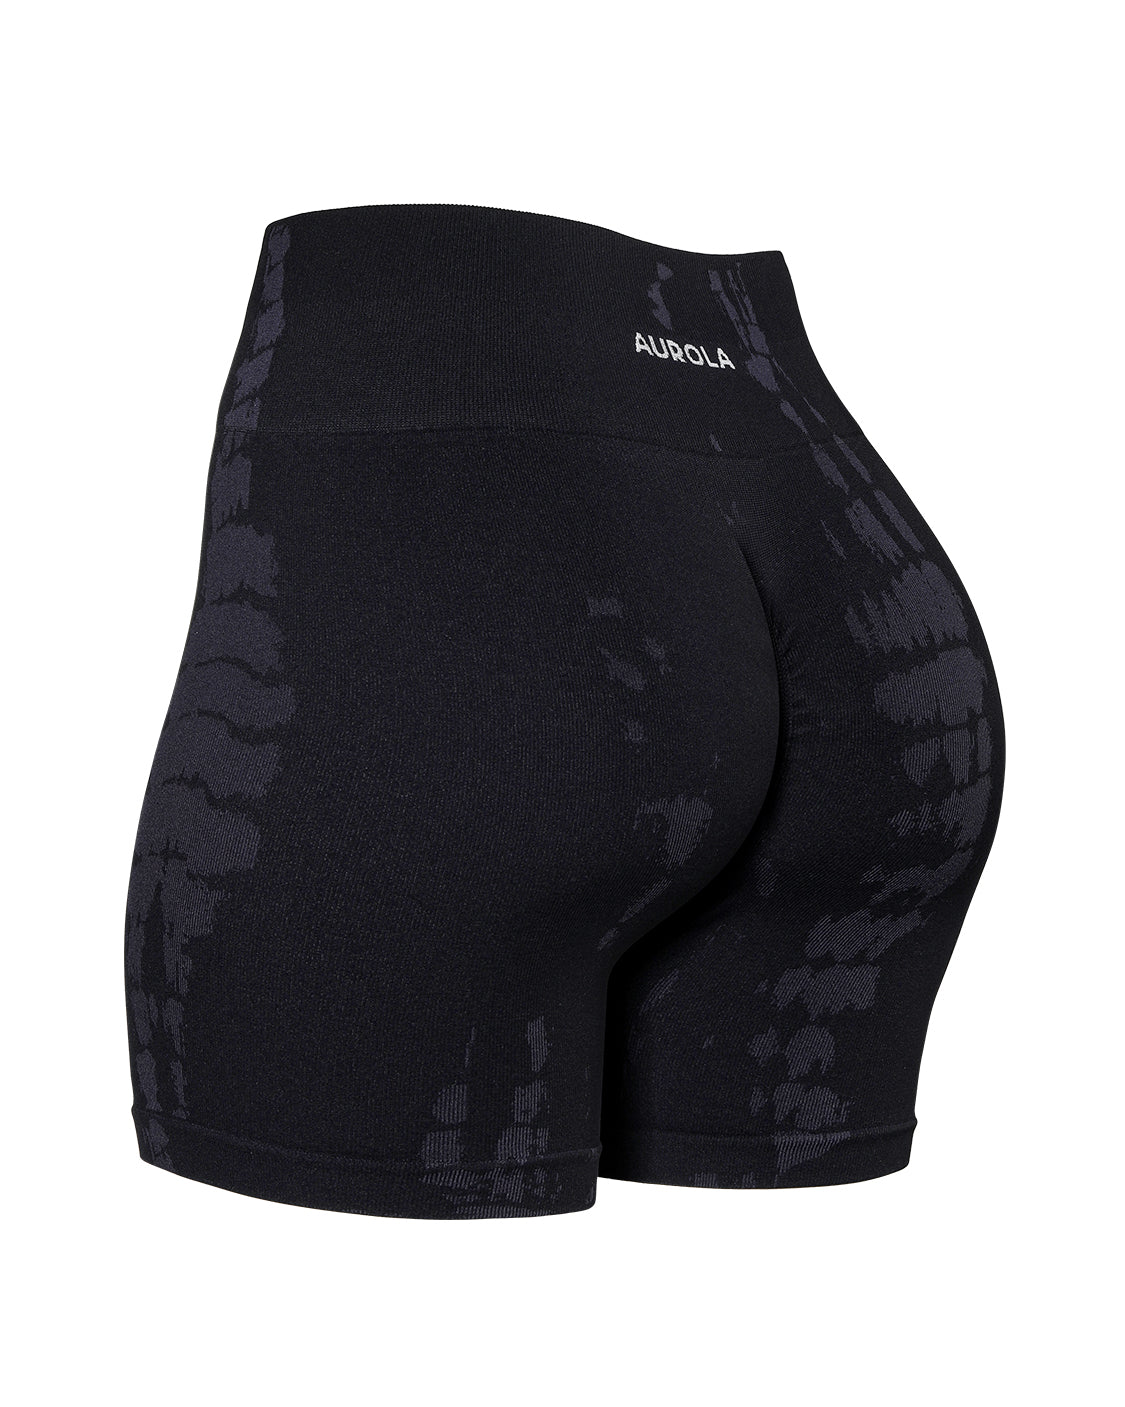 AUROLA Serpentine Shorts - Black / XS